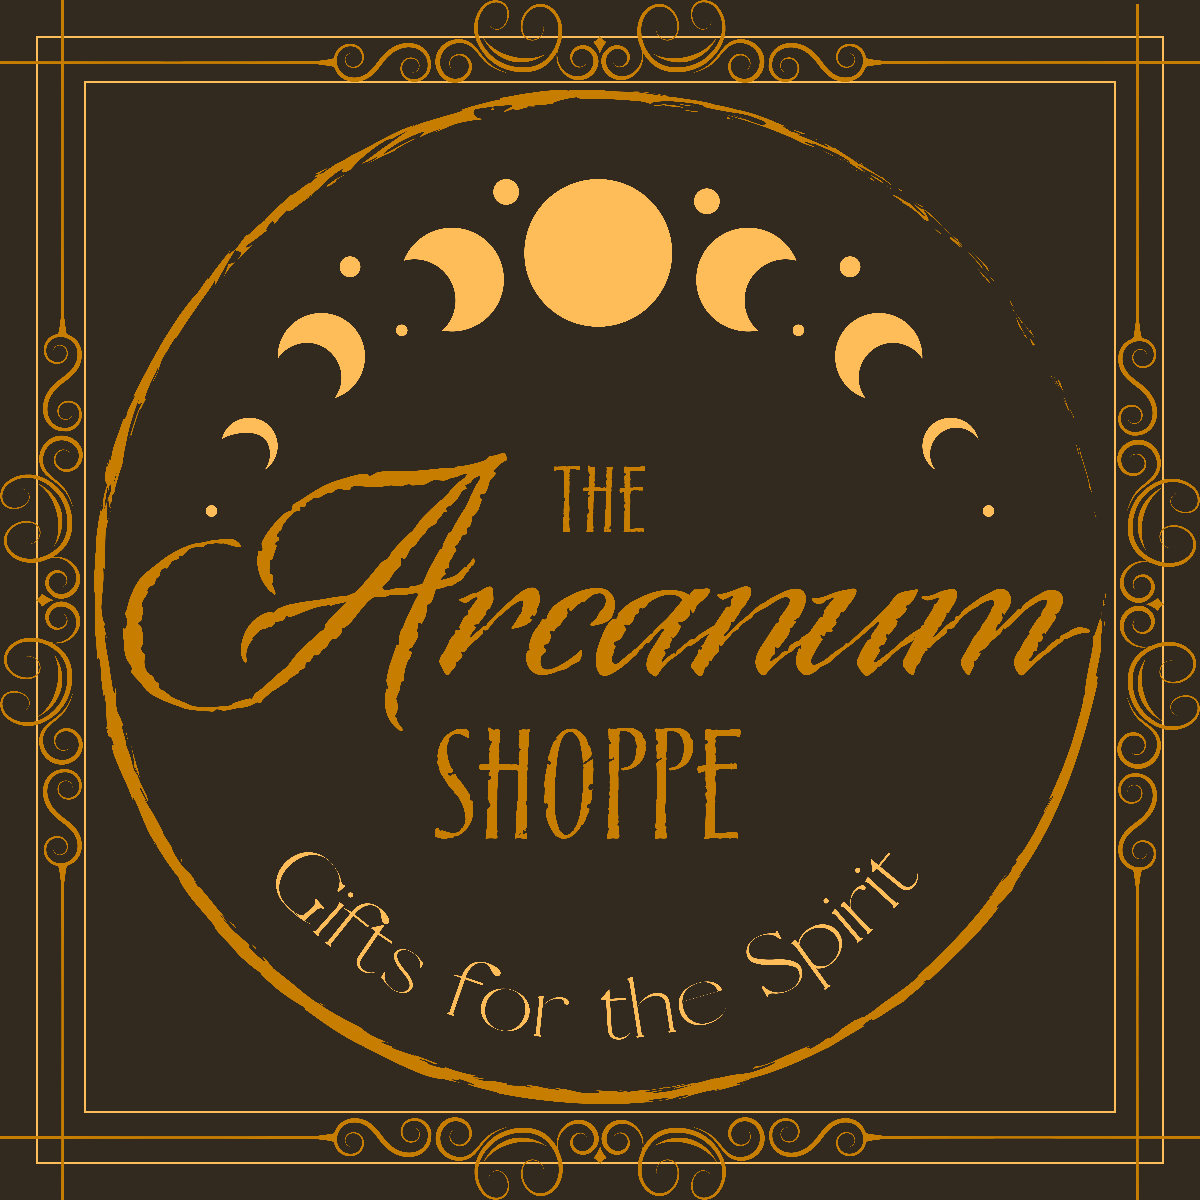 The Arcanum Shoppe in Coloma